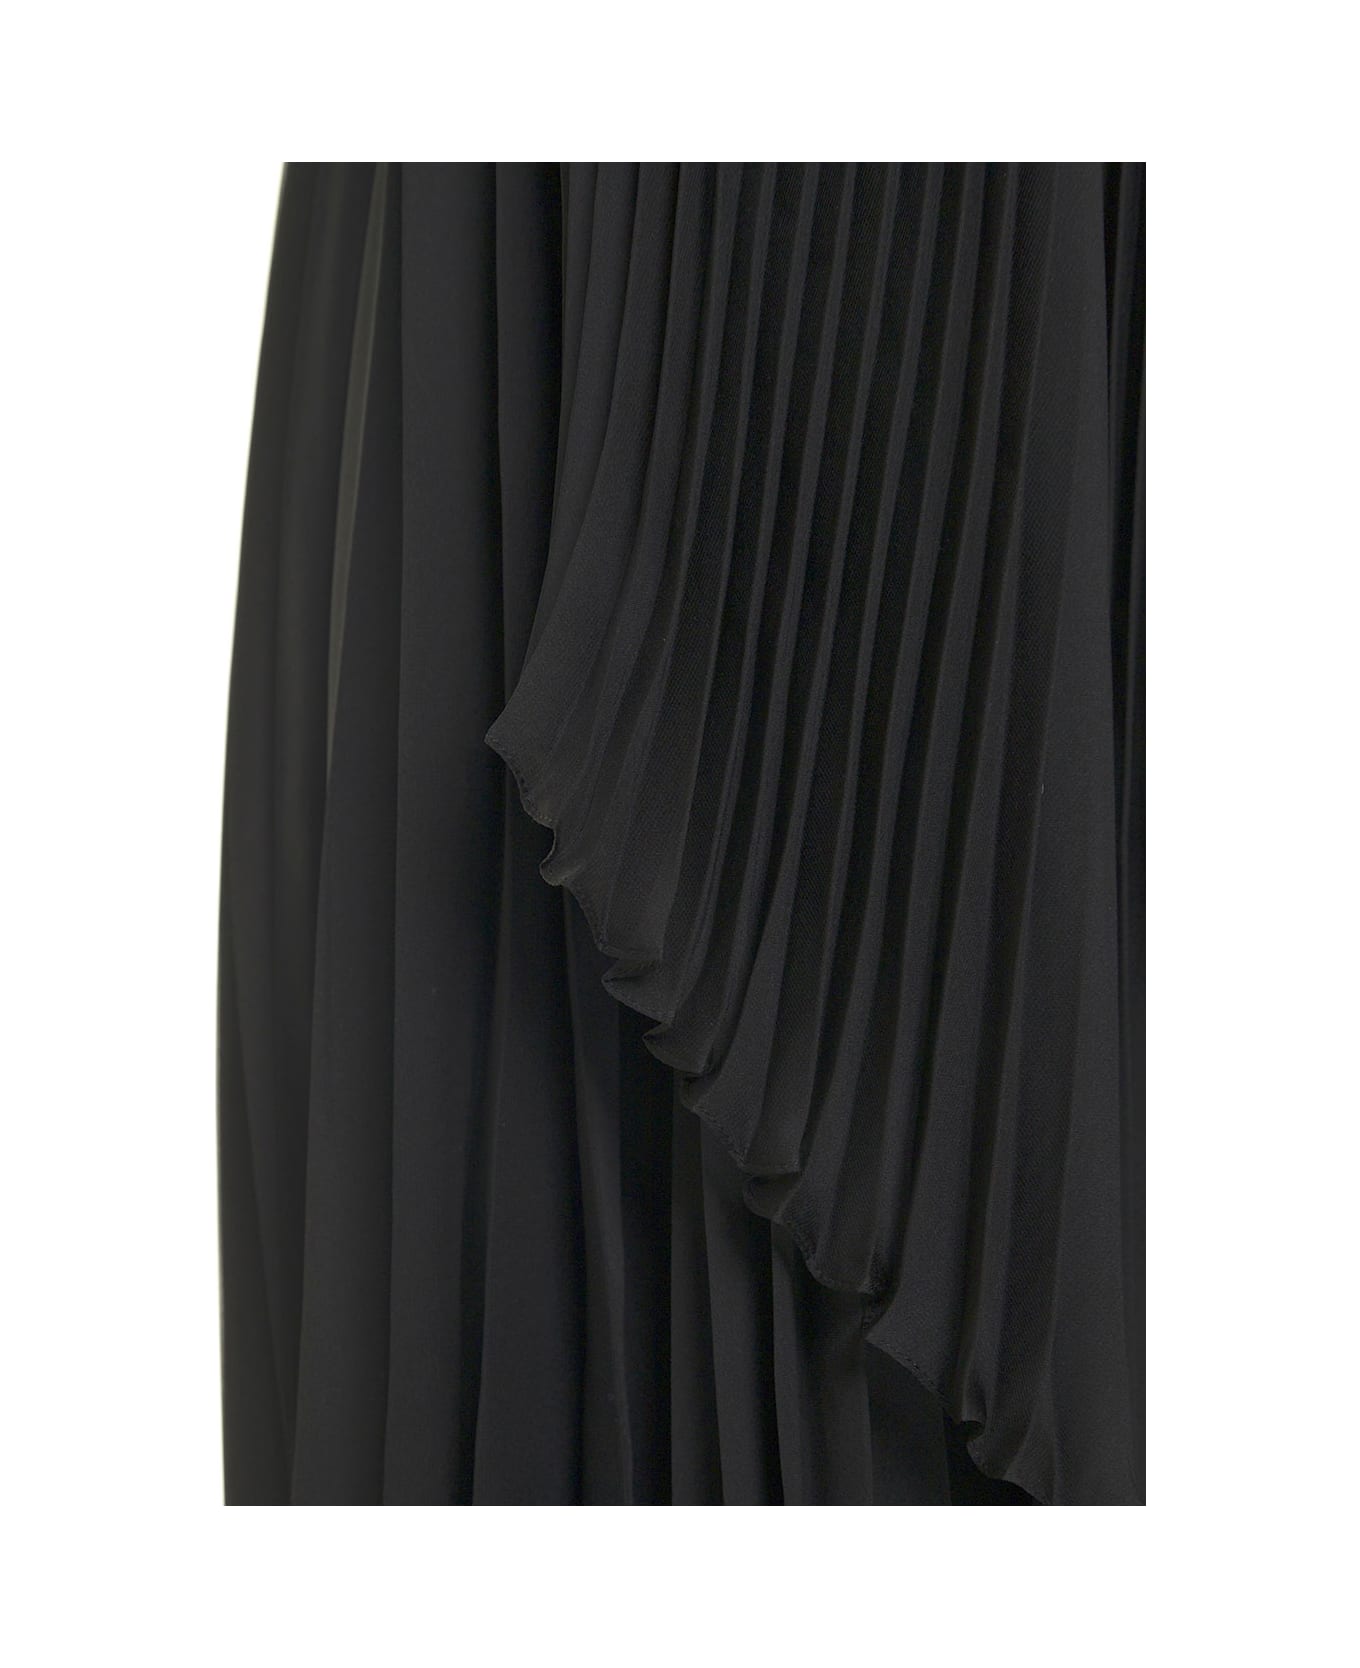 Givenchy Black Pleated Dress With Asymmetrical Bottom - Black